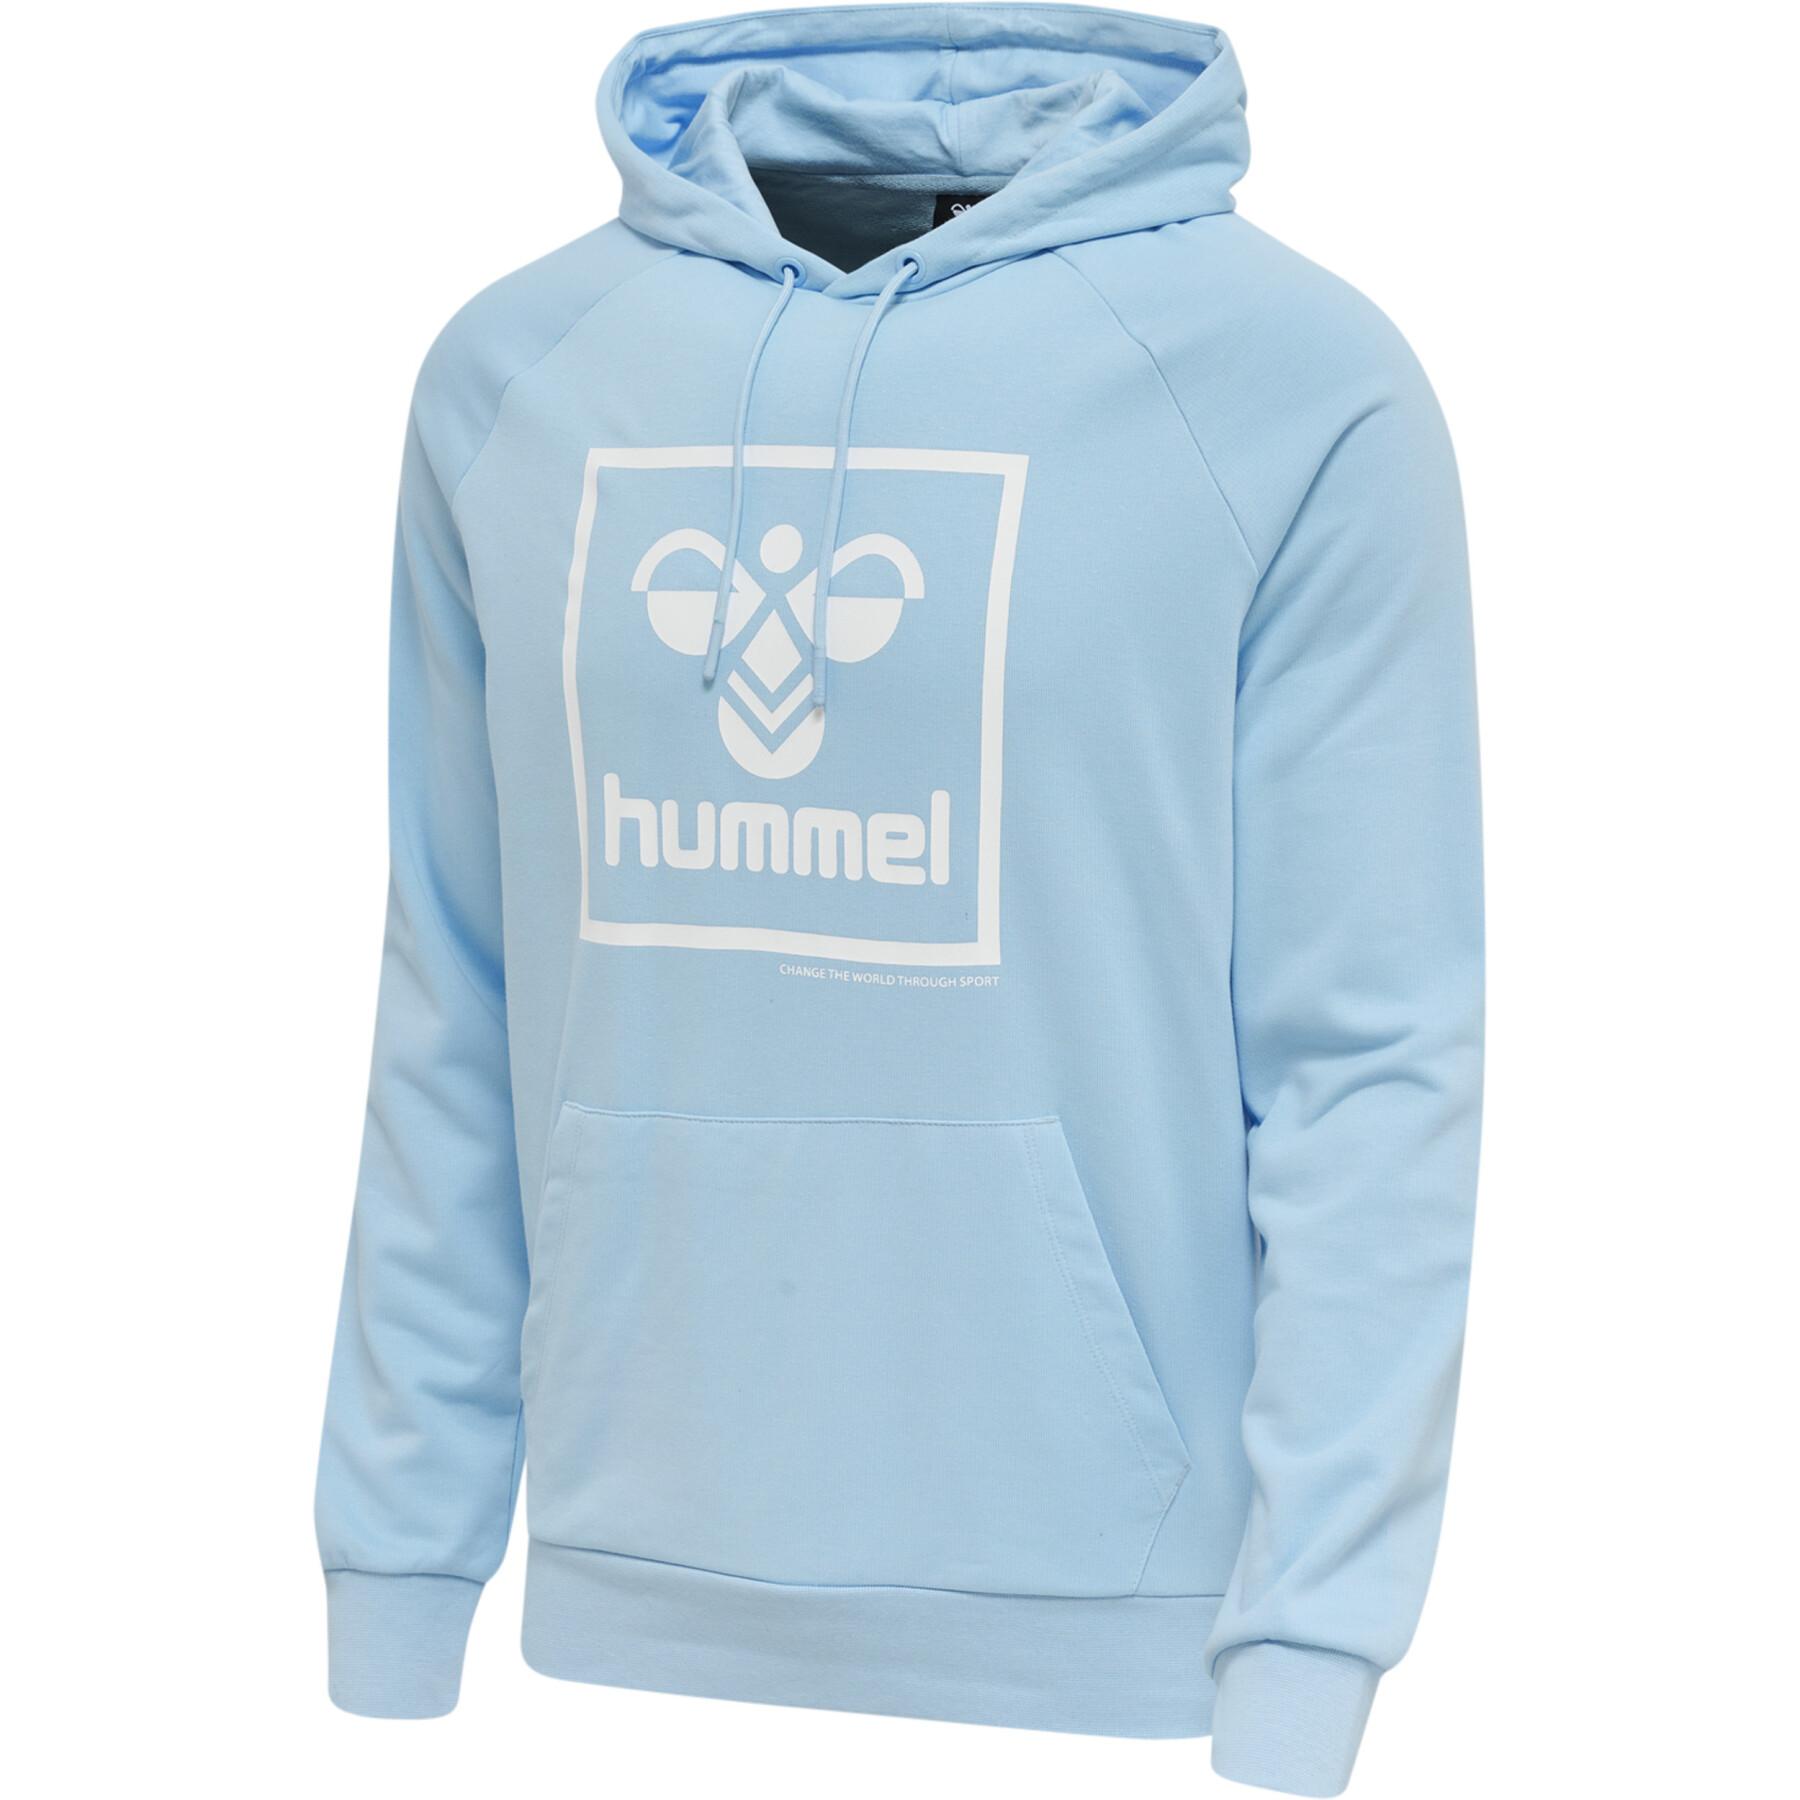 Hooded sweatshirt Hummel Isam Hummel Lifestyle - Brands 2.0 - 